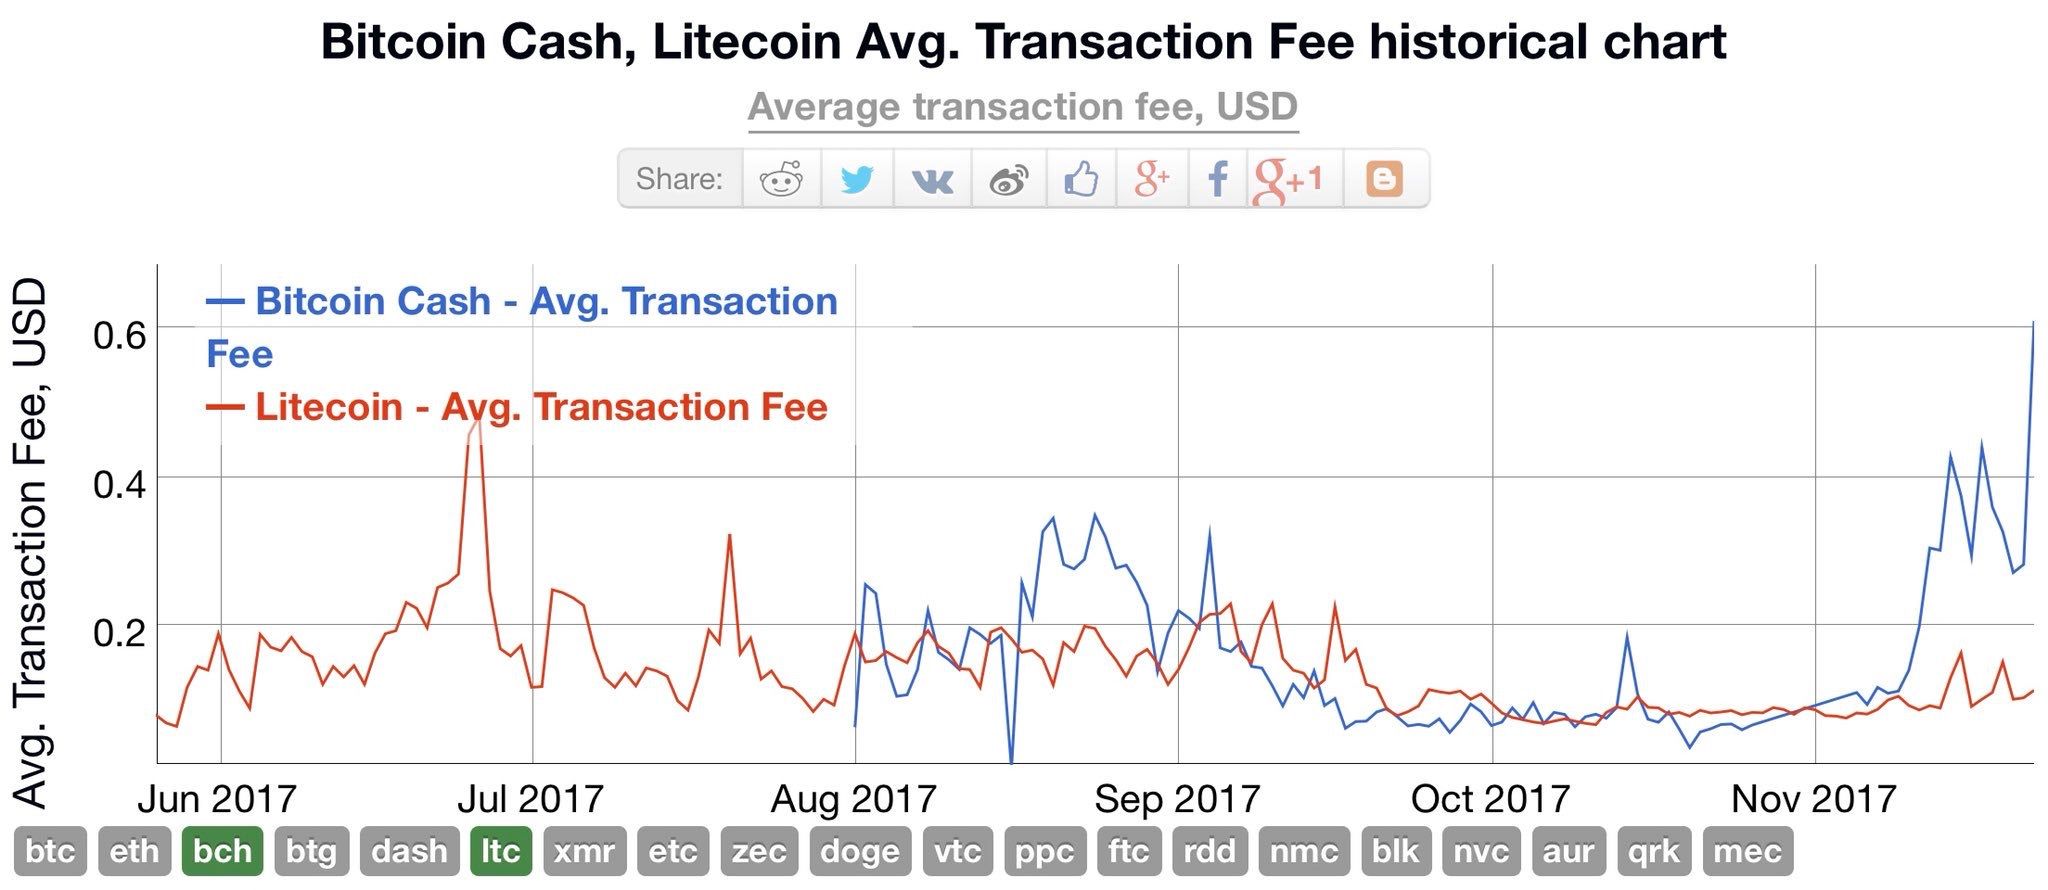 litecoin fees vs bitcoin cash fees